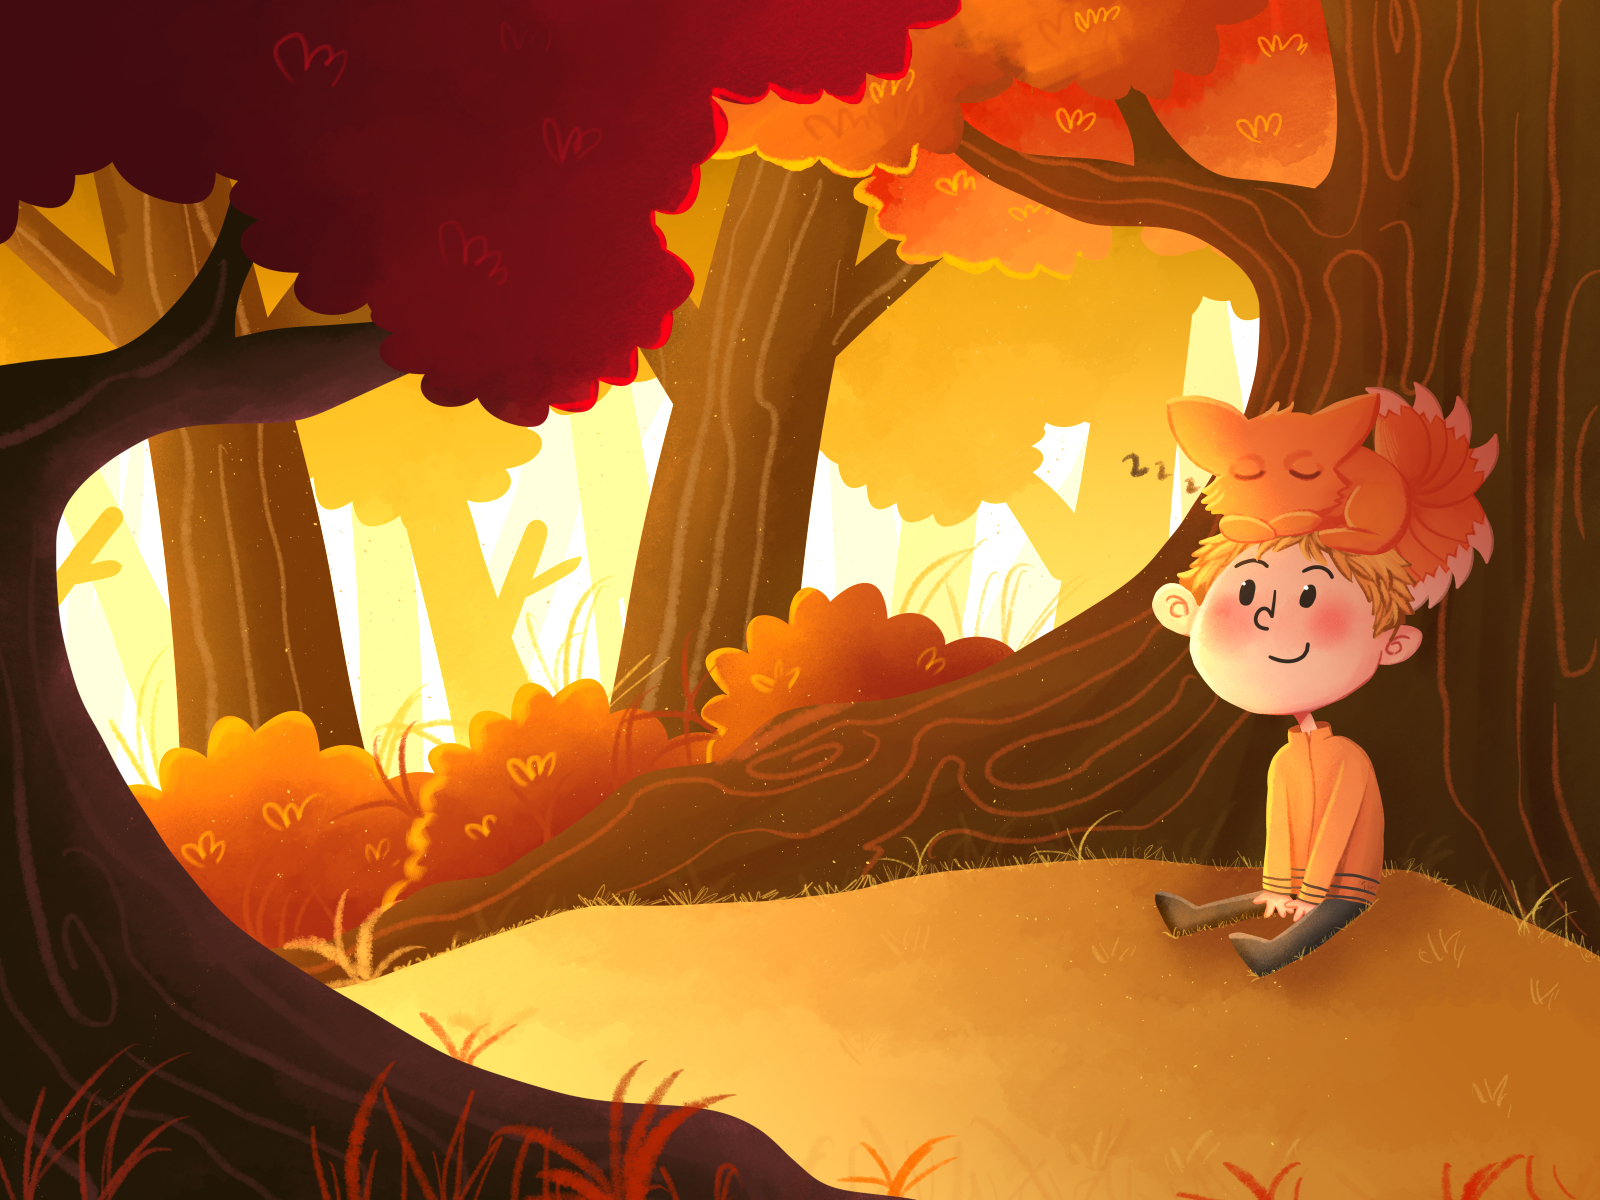 The Boy and His Fox by tichantika on Dribbble